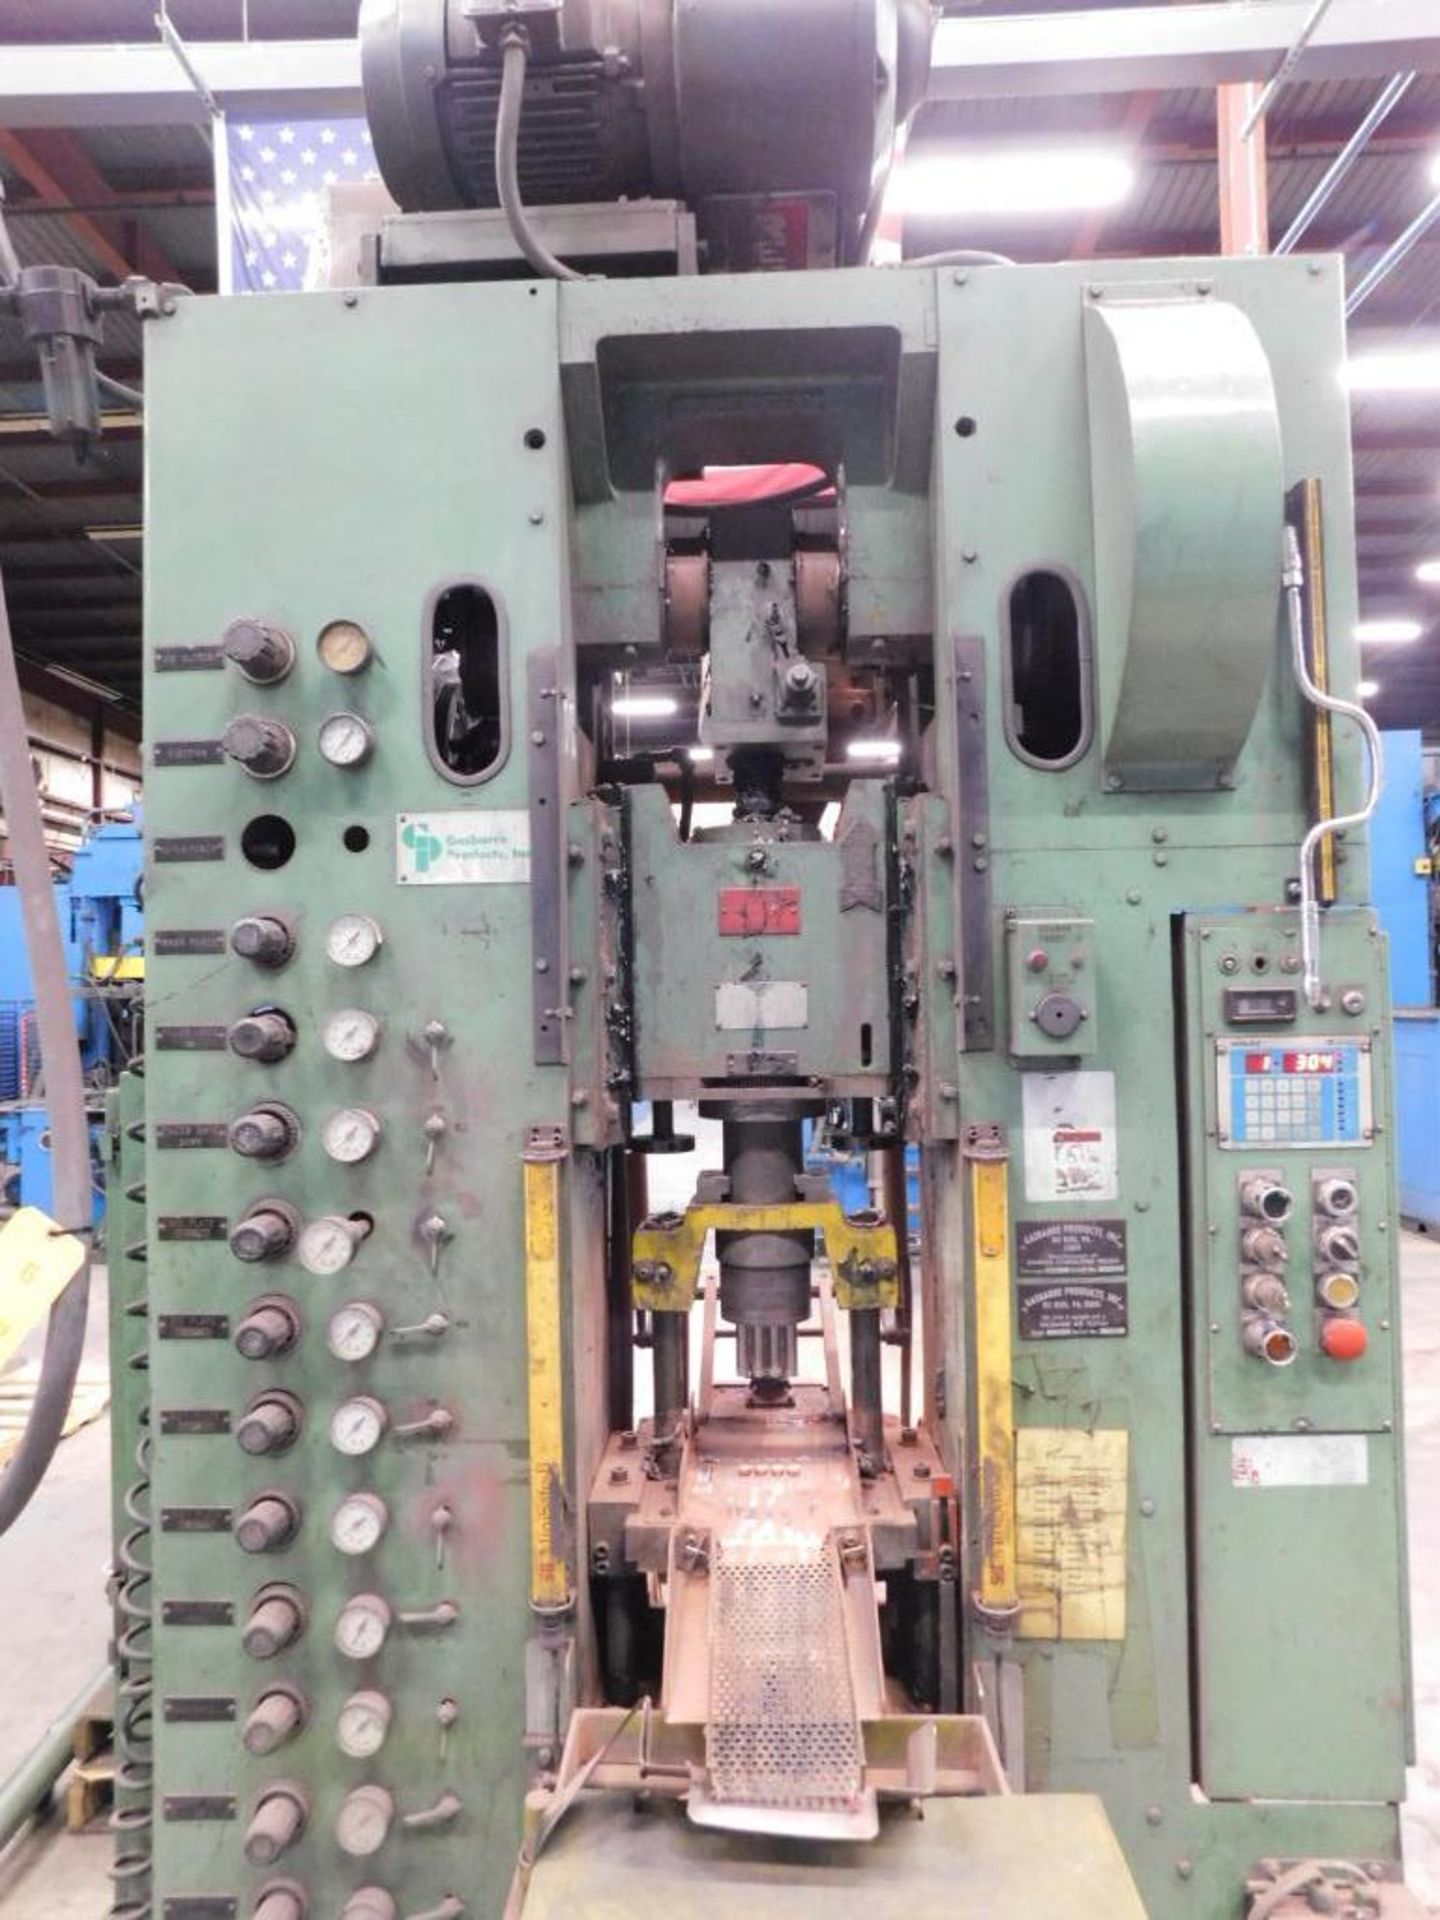 Gasbarre Powder Compacting Press, Mechanical, Model 30 Standard, S/N: 86256, 30 Ton Maximum Pressing - Image 6 of 22